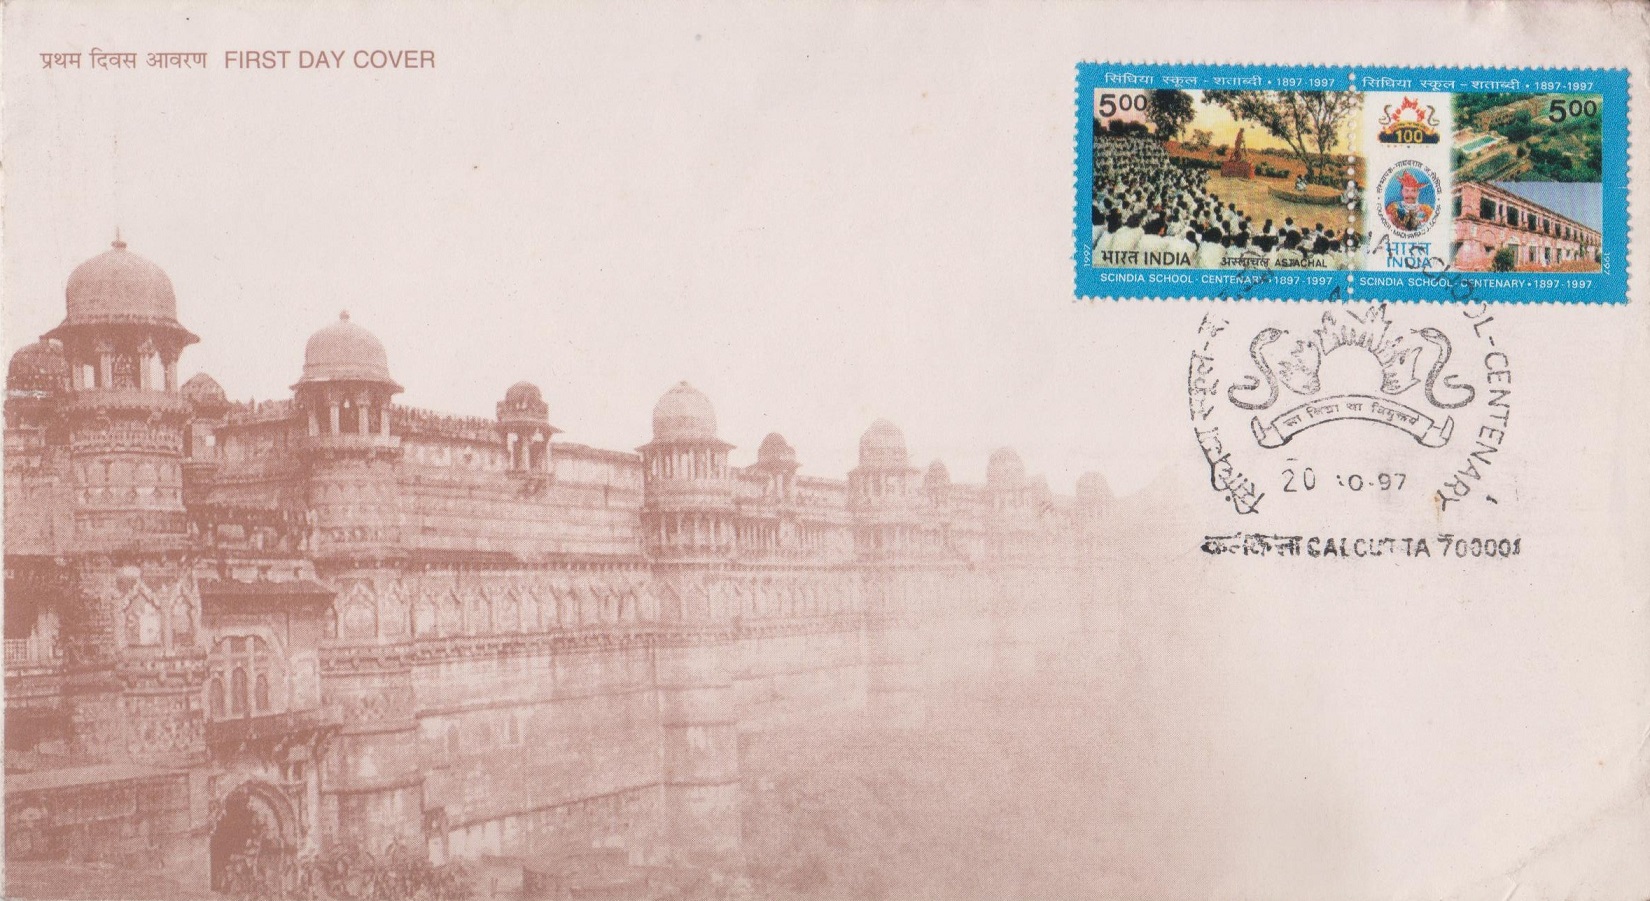 Gwalior Fort (ग्वालियर क़िला)